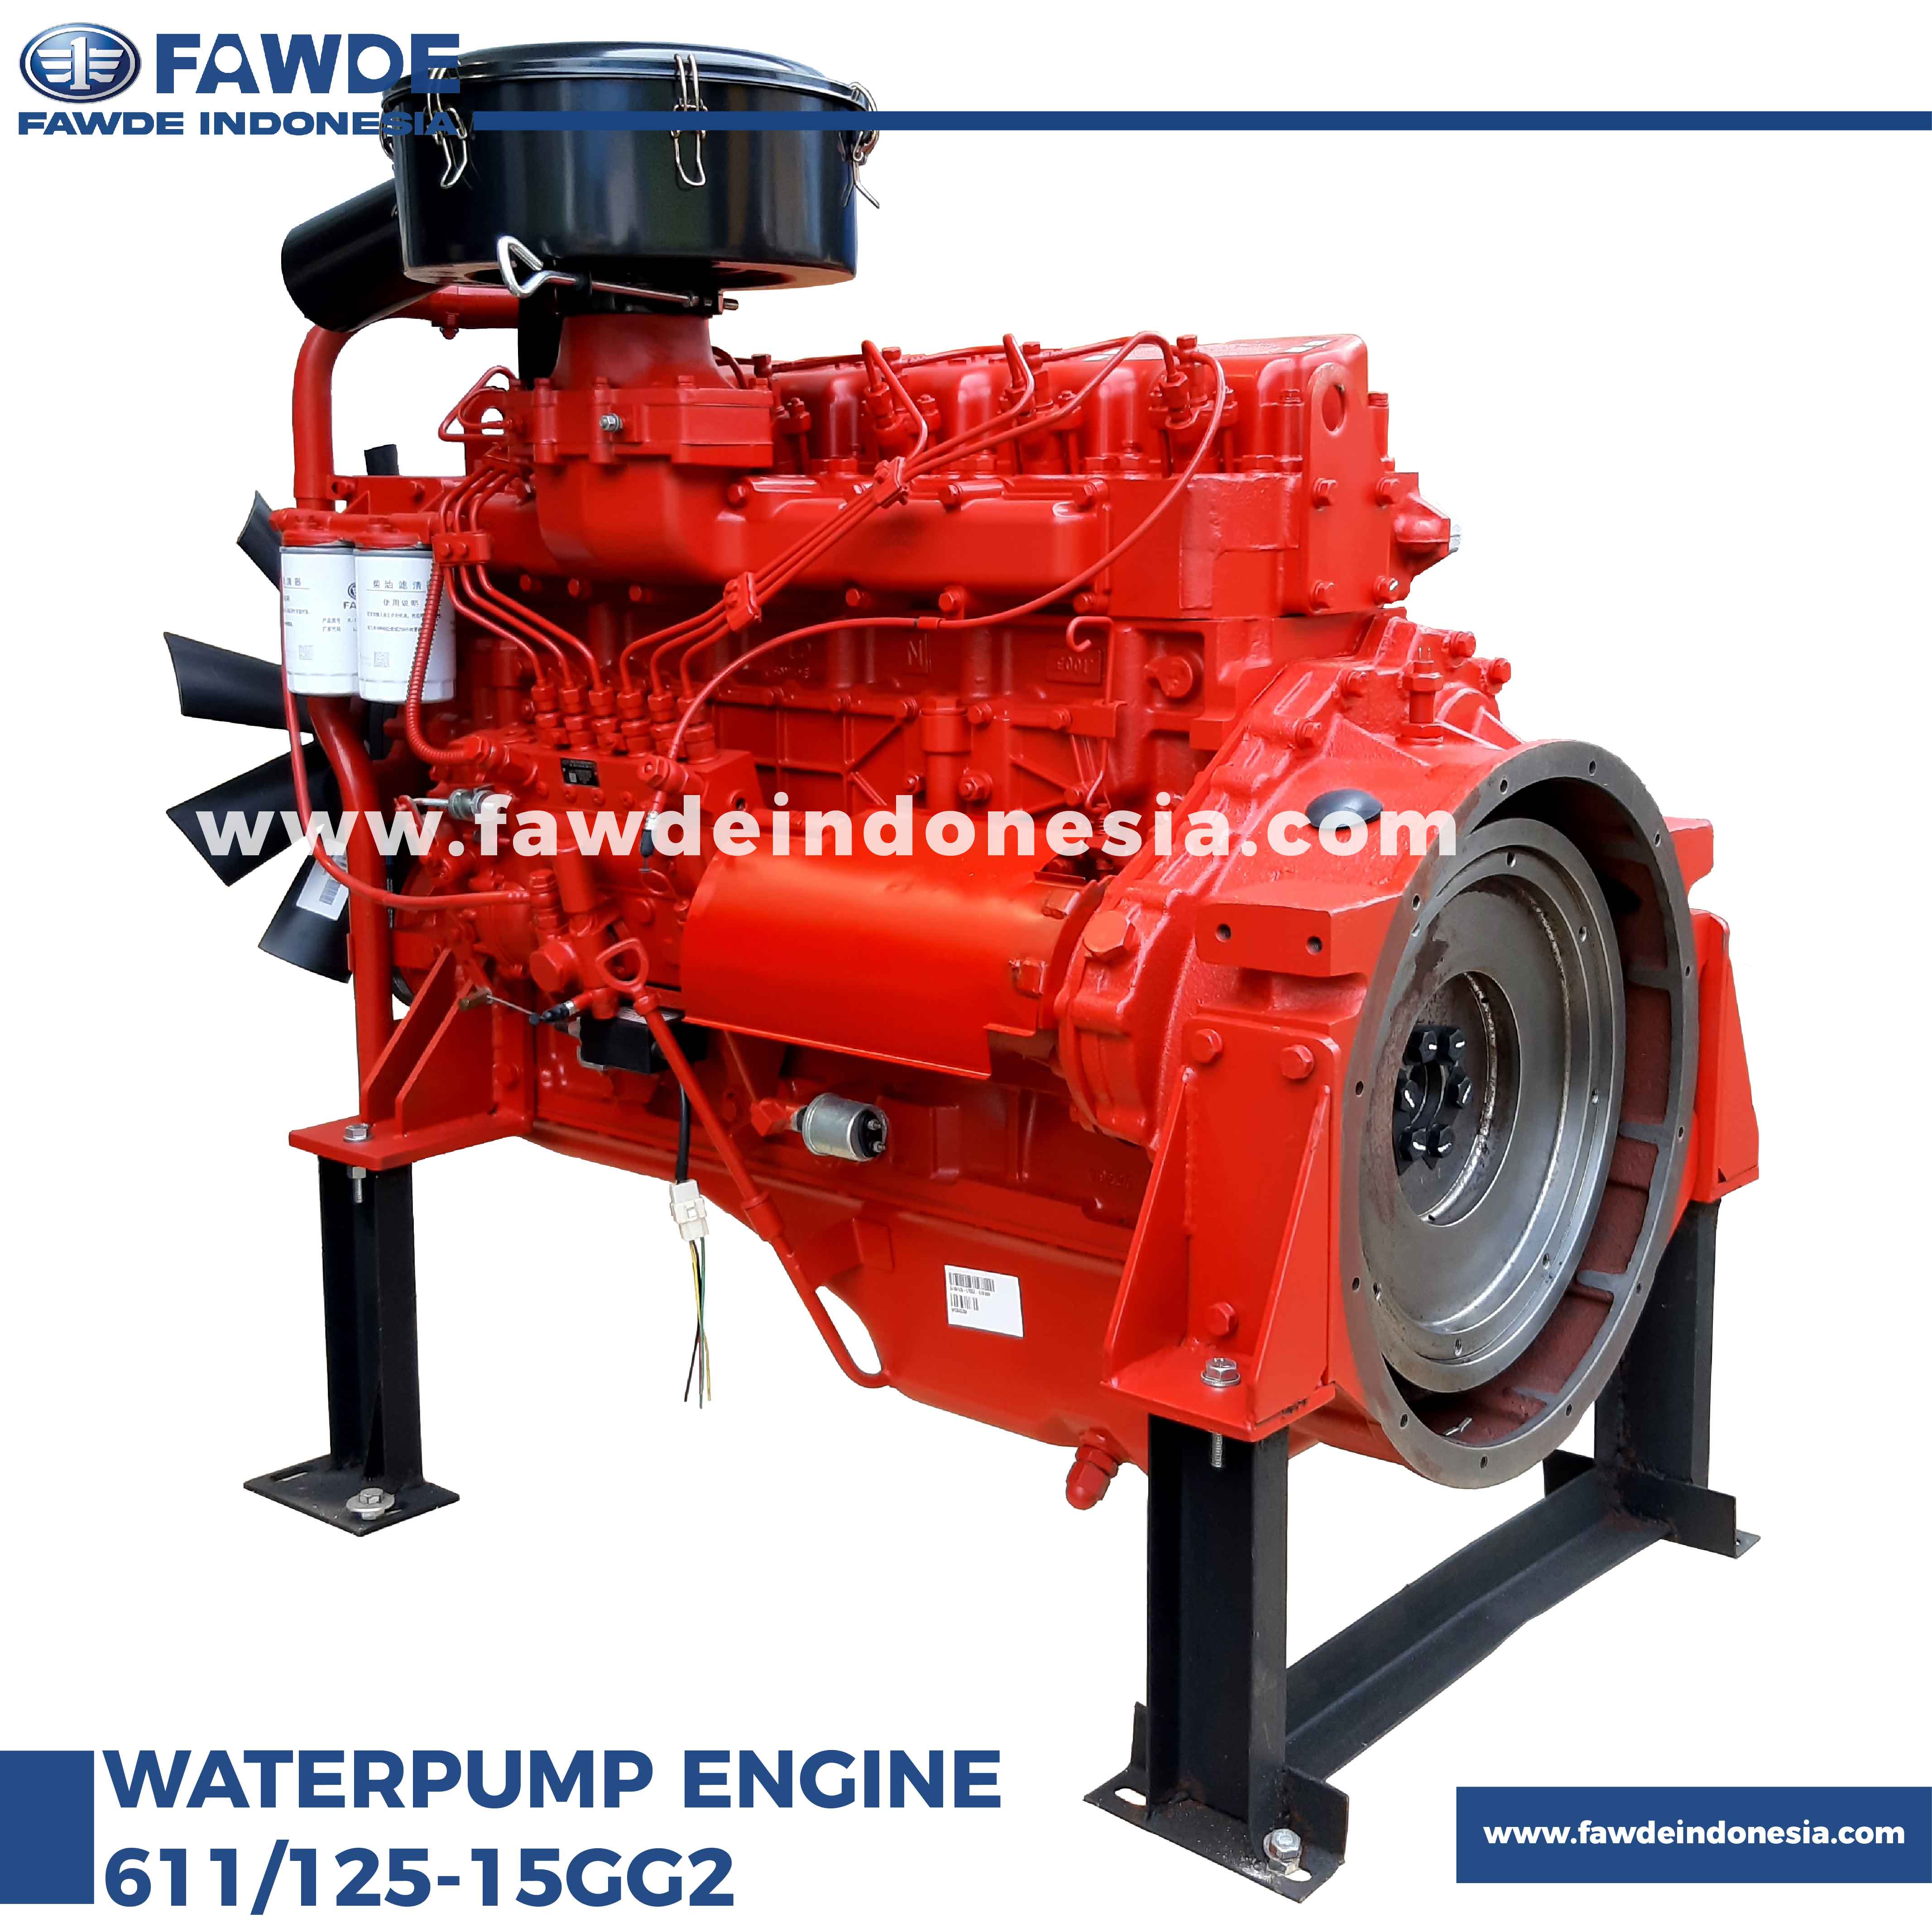 waterpump engine 611-125-15gg2_1